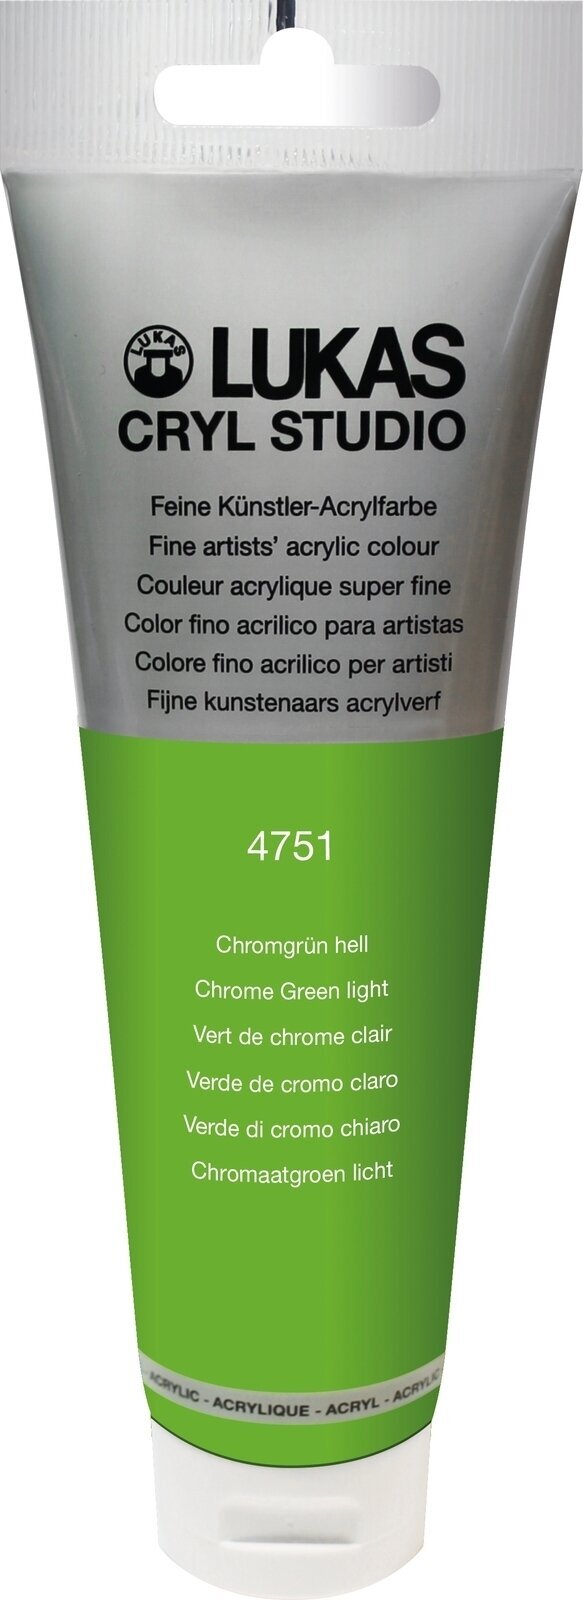 Acrylic Paint Lukas Cryl Studio Acrylic Paint 125 ml Chrome Green Light